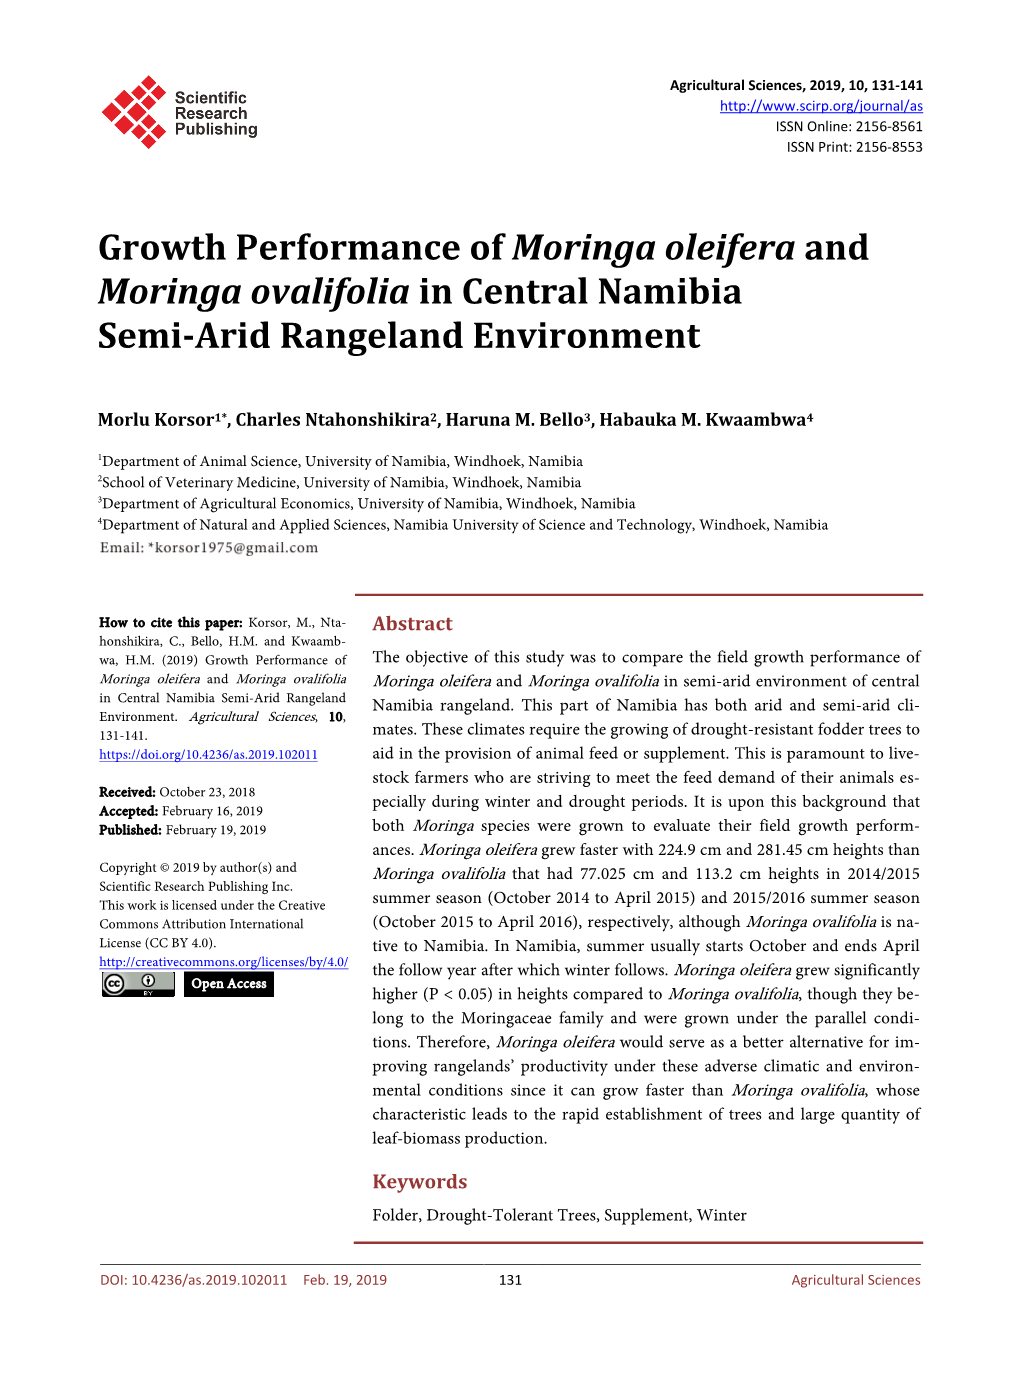 Growth Performance of Moringa Oleifera and Moringa Ovalifolia in Central Namibia Semi-Arid Rangeland Environment